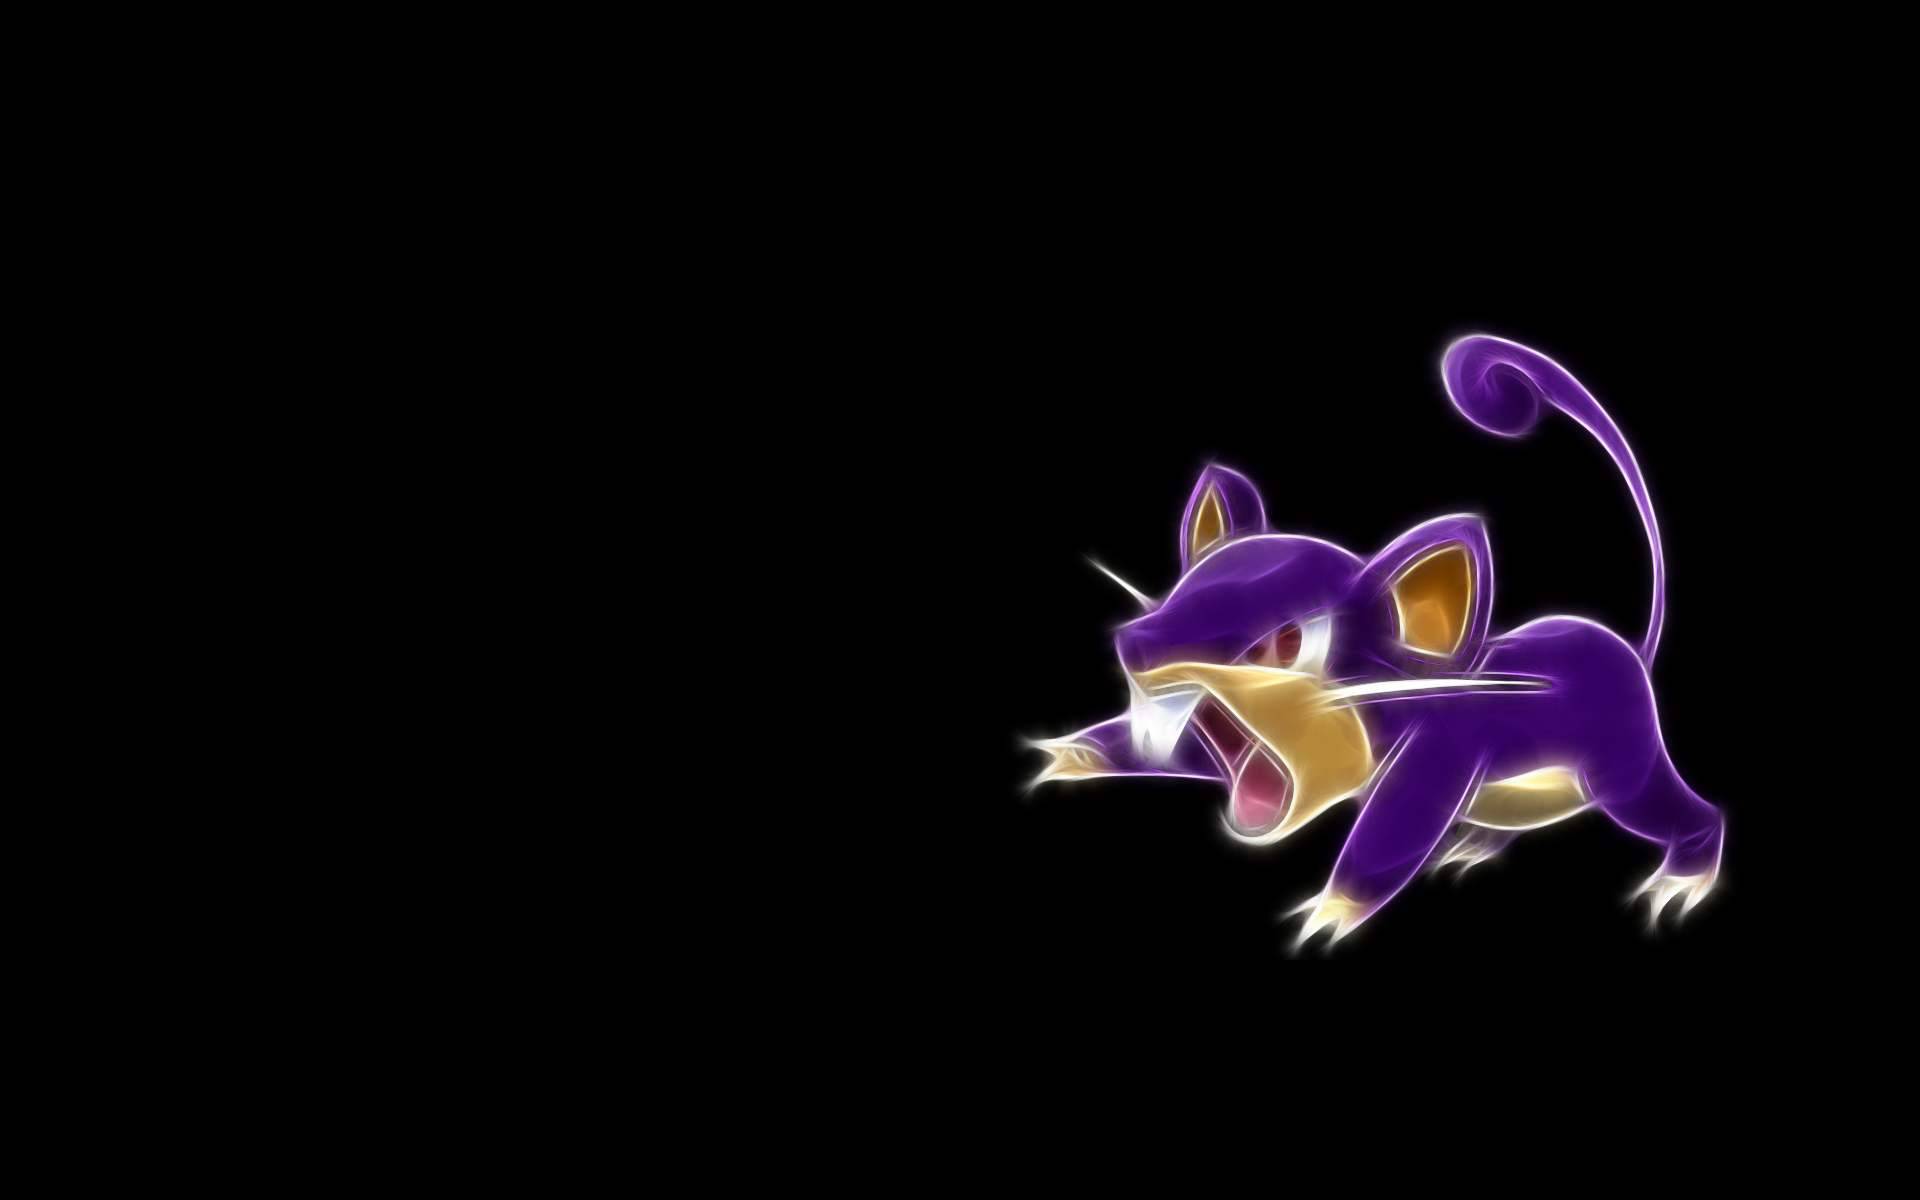 Pokemon Rattata Image